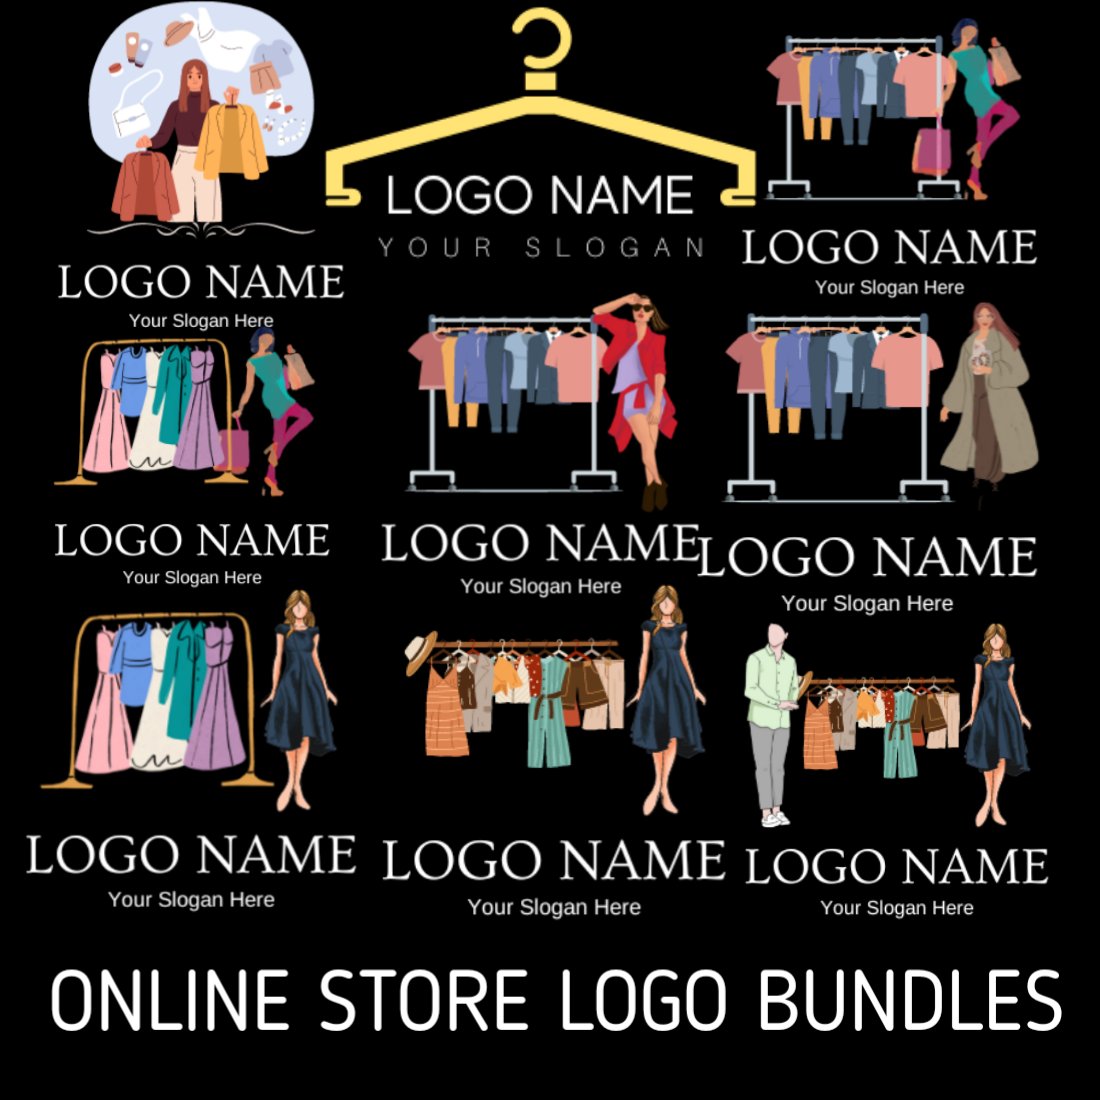 Fashion Online Store Logo | Online Clothing Logo Bundles cover image.